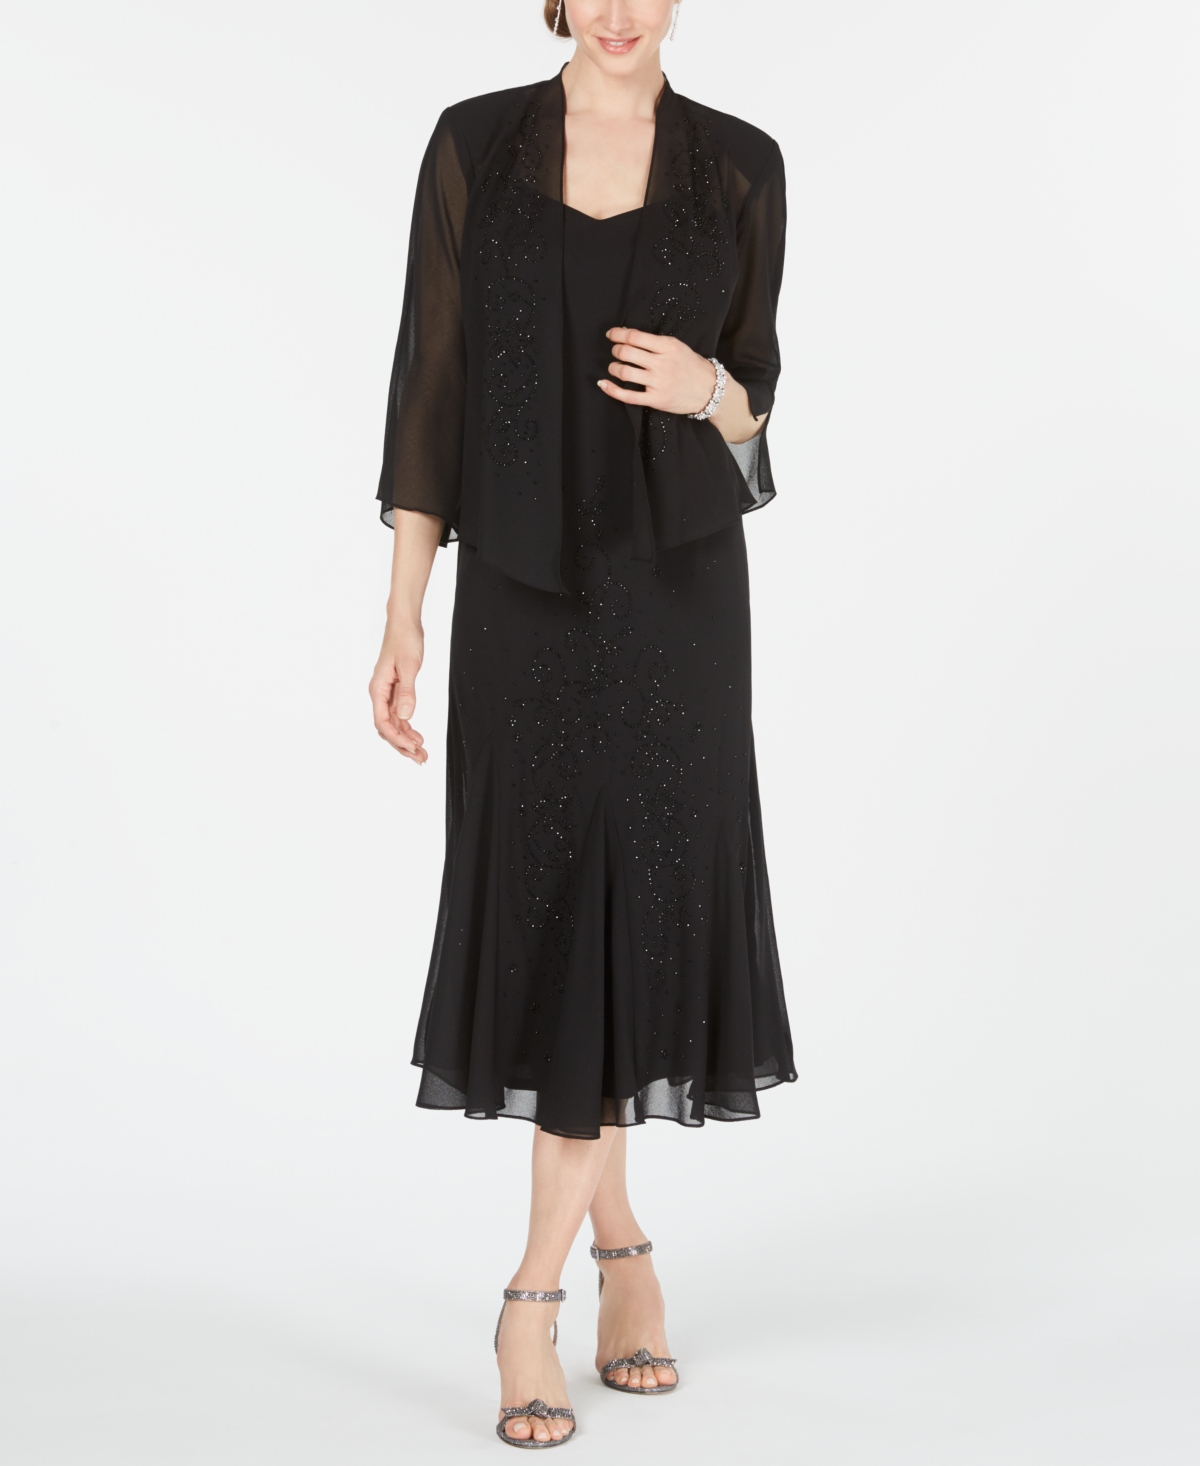 Buy Boardwalk Empire Inspired Dresses RM Richards Sleeveless Beaded V-Neck Dress and Jacket - Black $129.00 AT vintagedancer.com